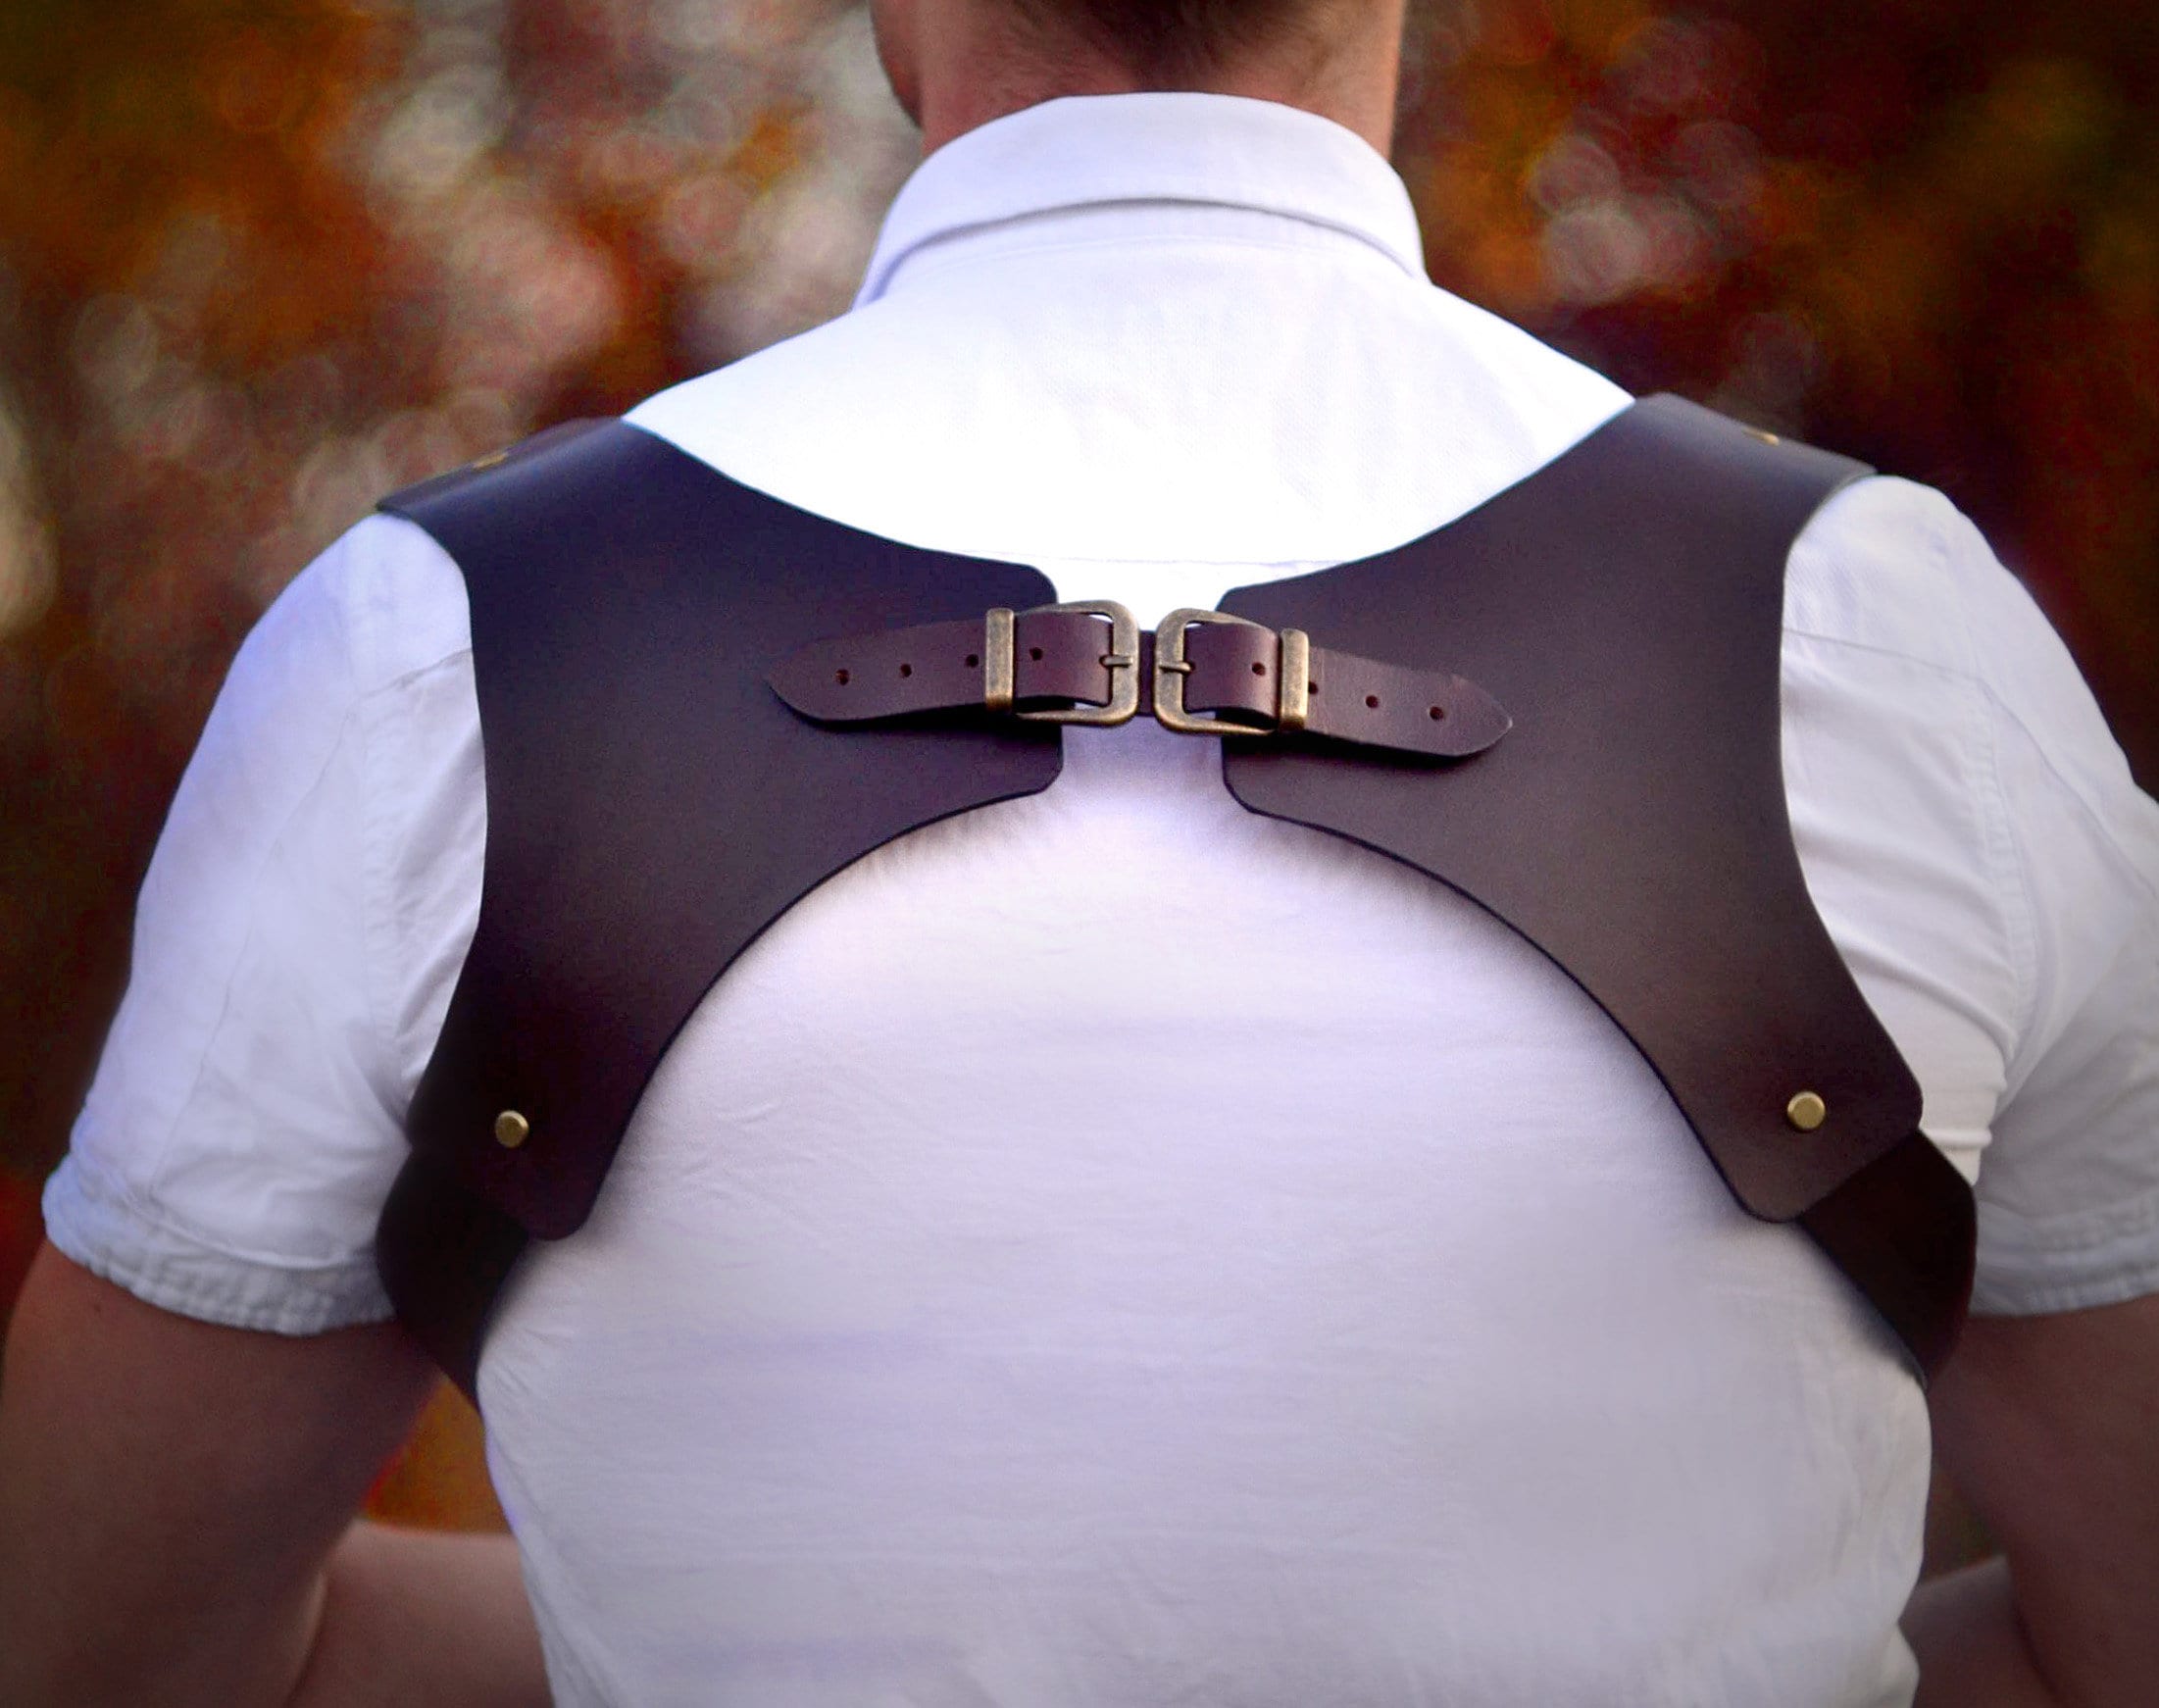 BODIY Men's Leather Suspenders Shoulder Strap Adjustable Body Belt Fashion  Harness for Men Wedding Groomsmen Body Accessory